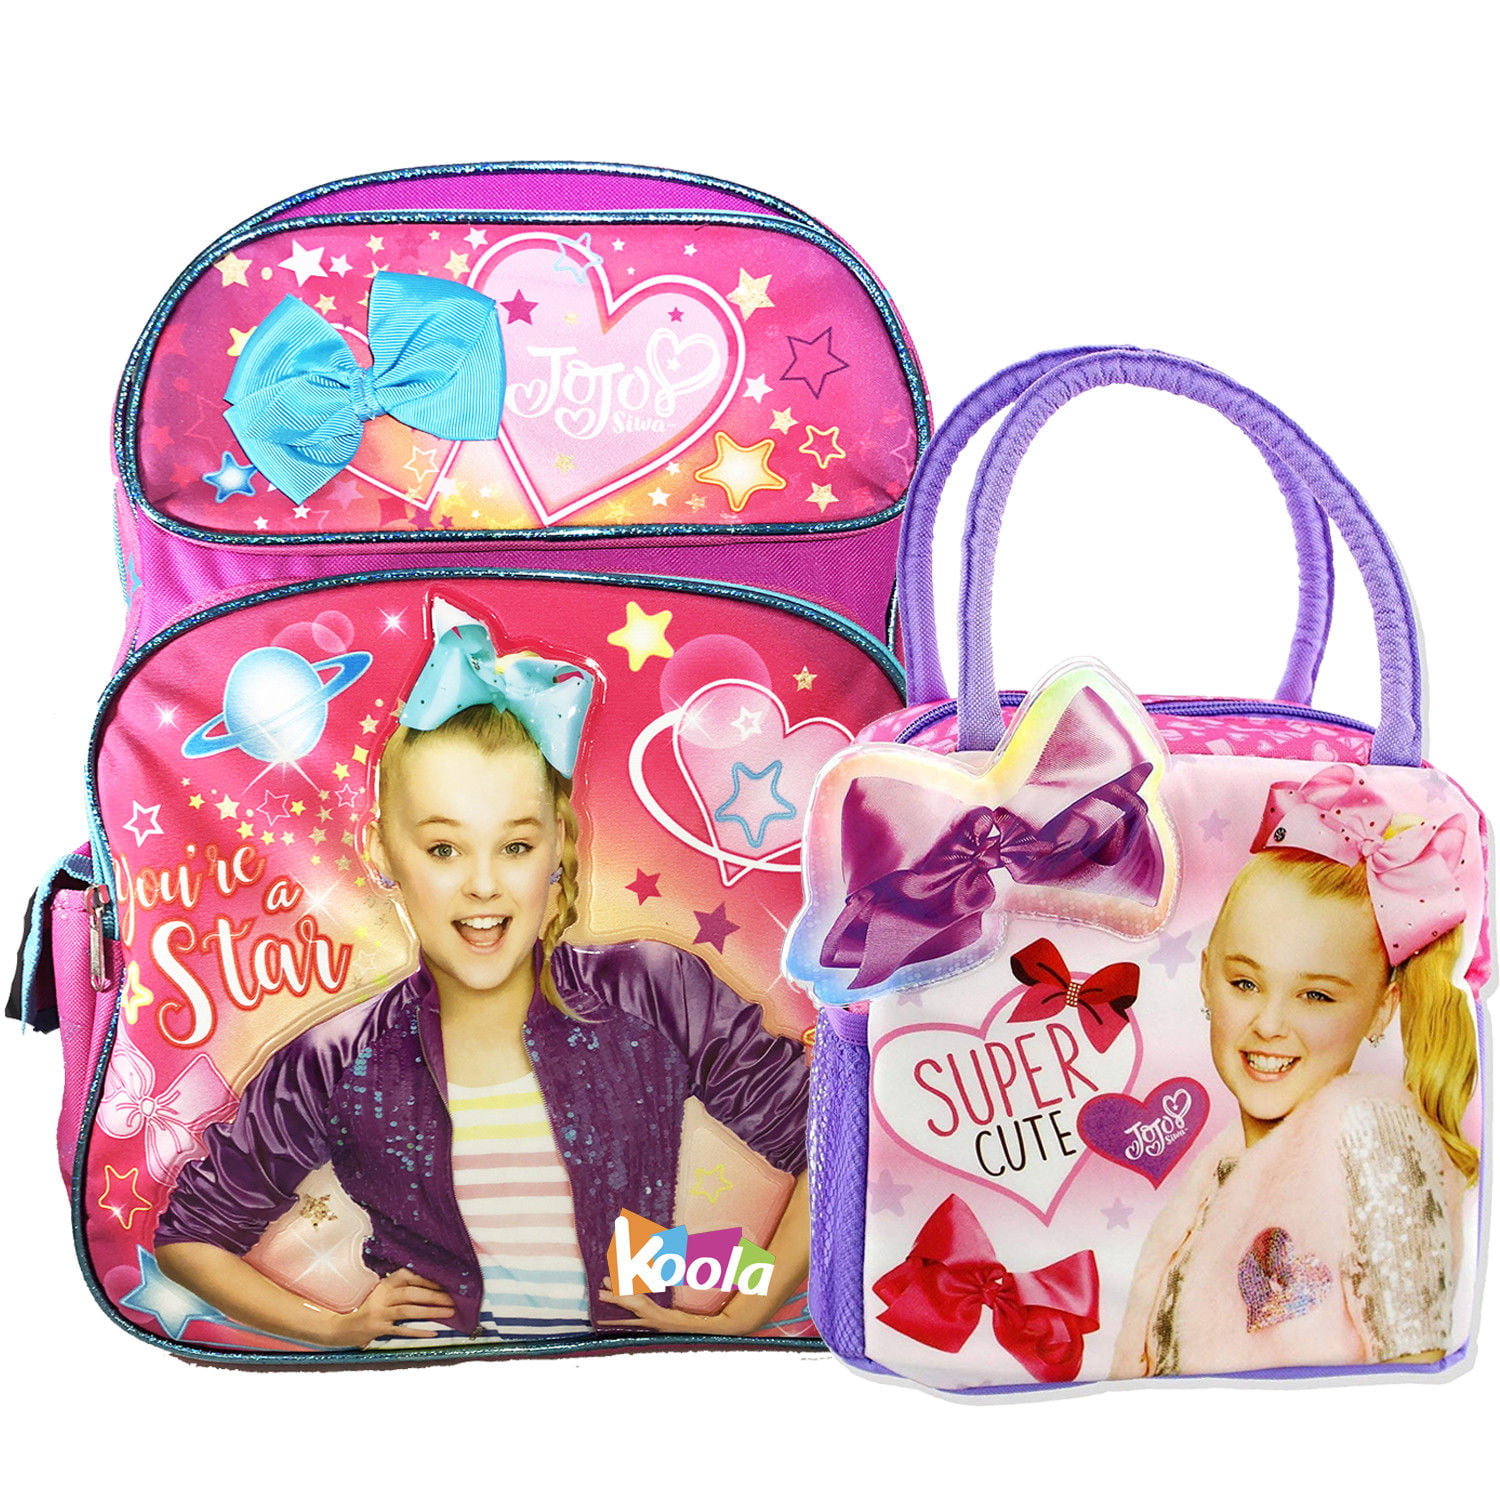 JoJo Siwa Girls Pink School Backpack Lunch box Book Bag Bow Kids Toy Gift Dream 